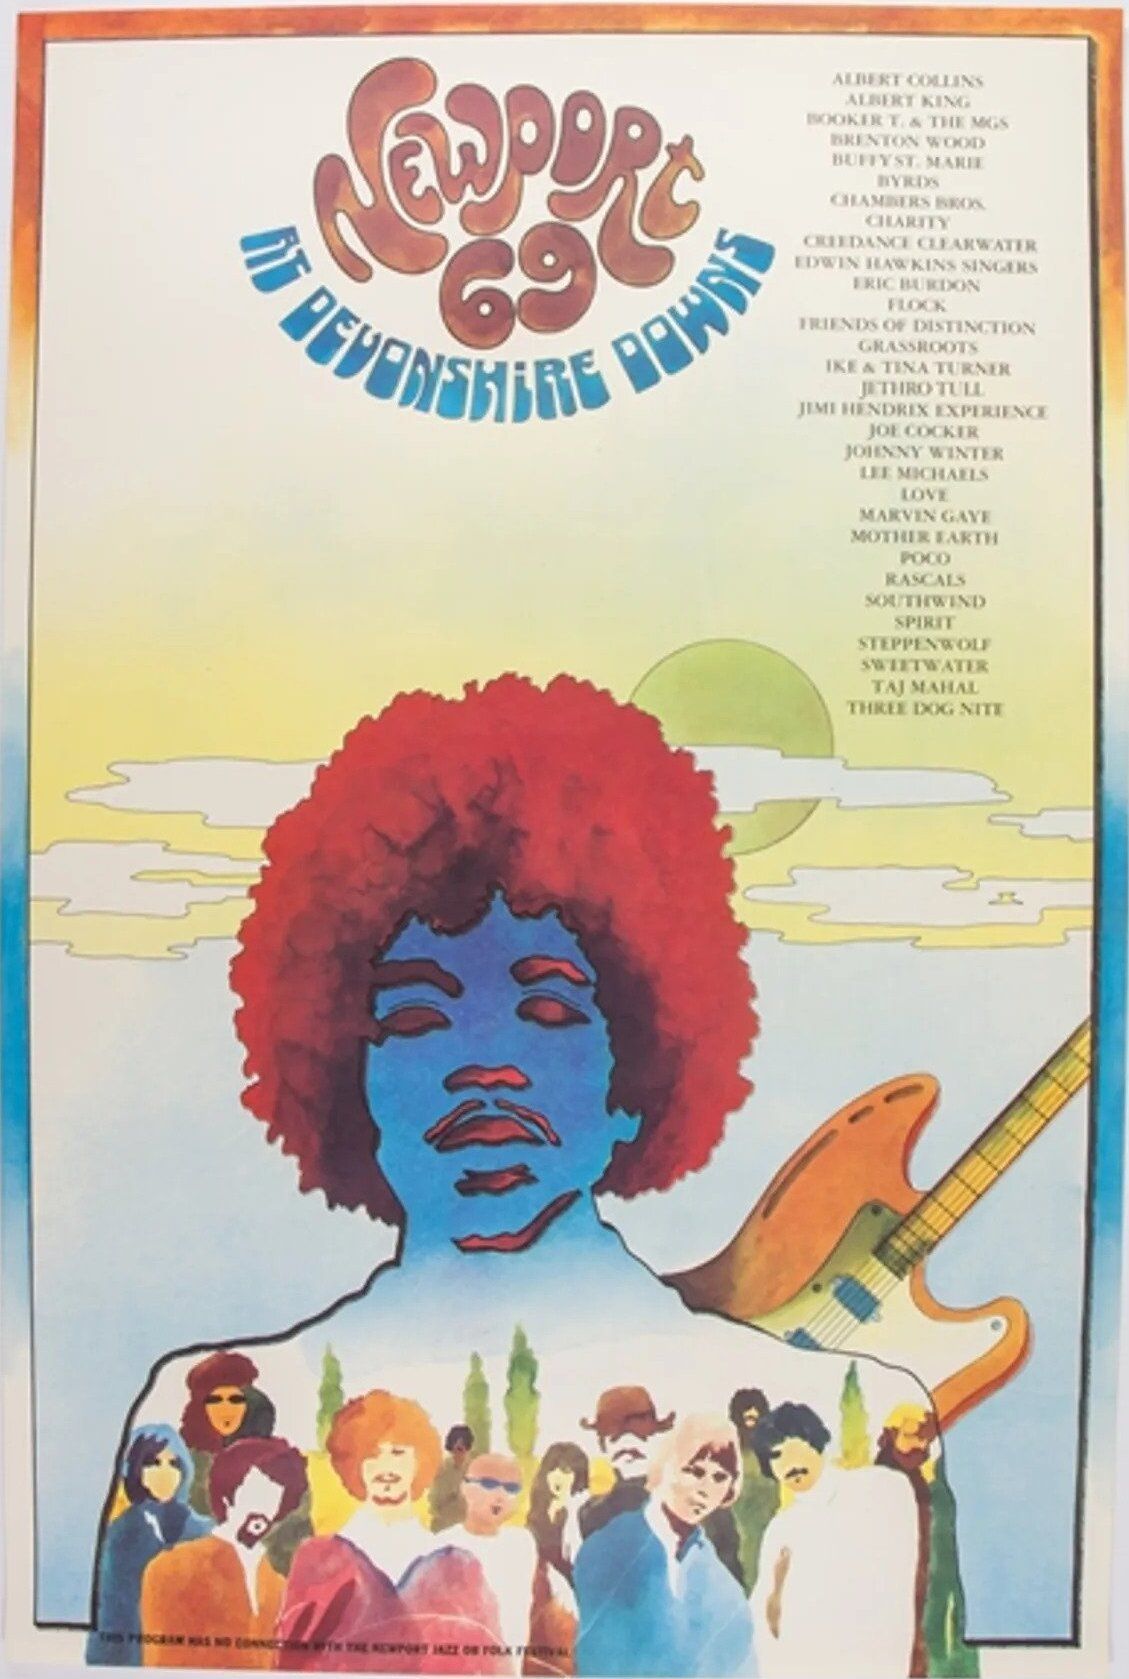 Newport Pop Festival featuring Jimi Hendrix Devonshire Downs 1969 Concert Poster